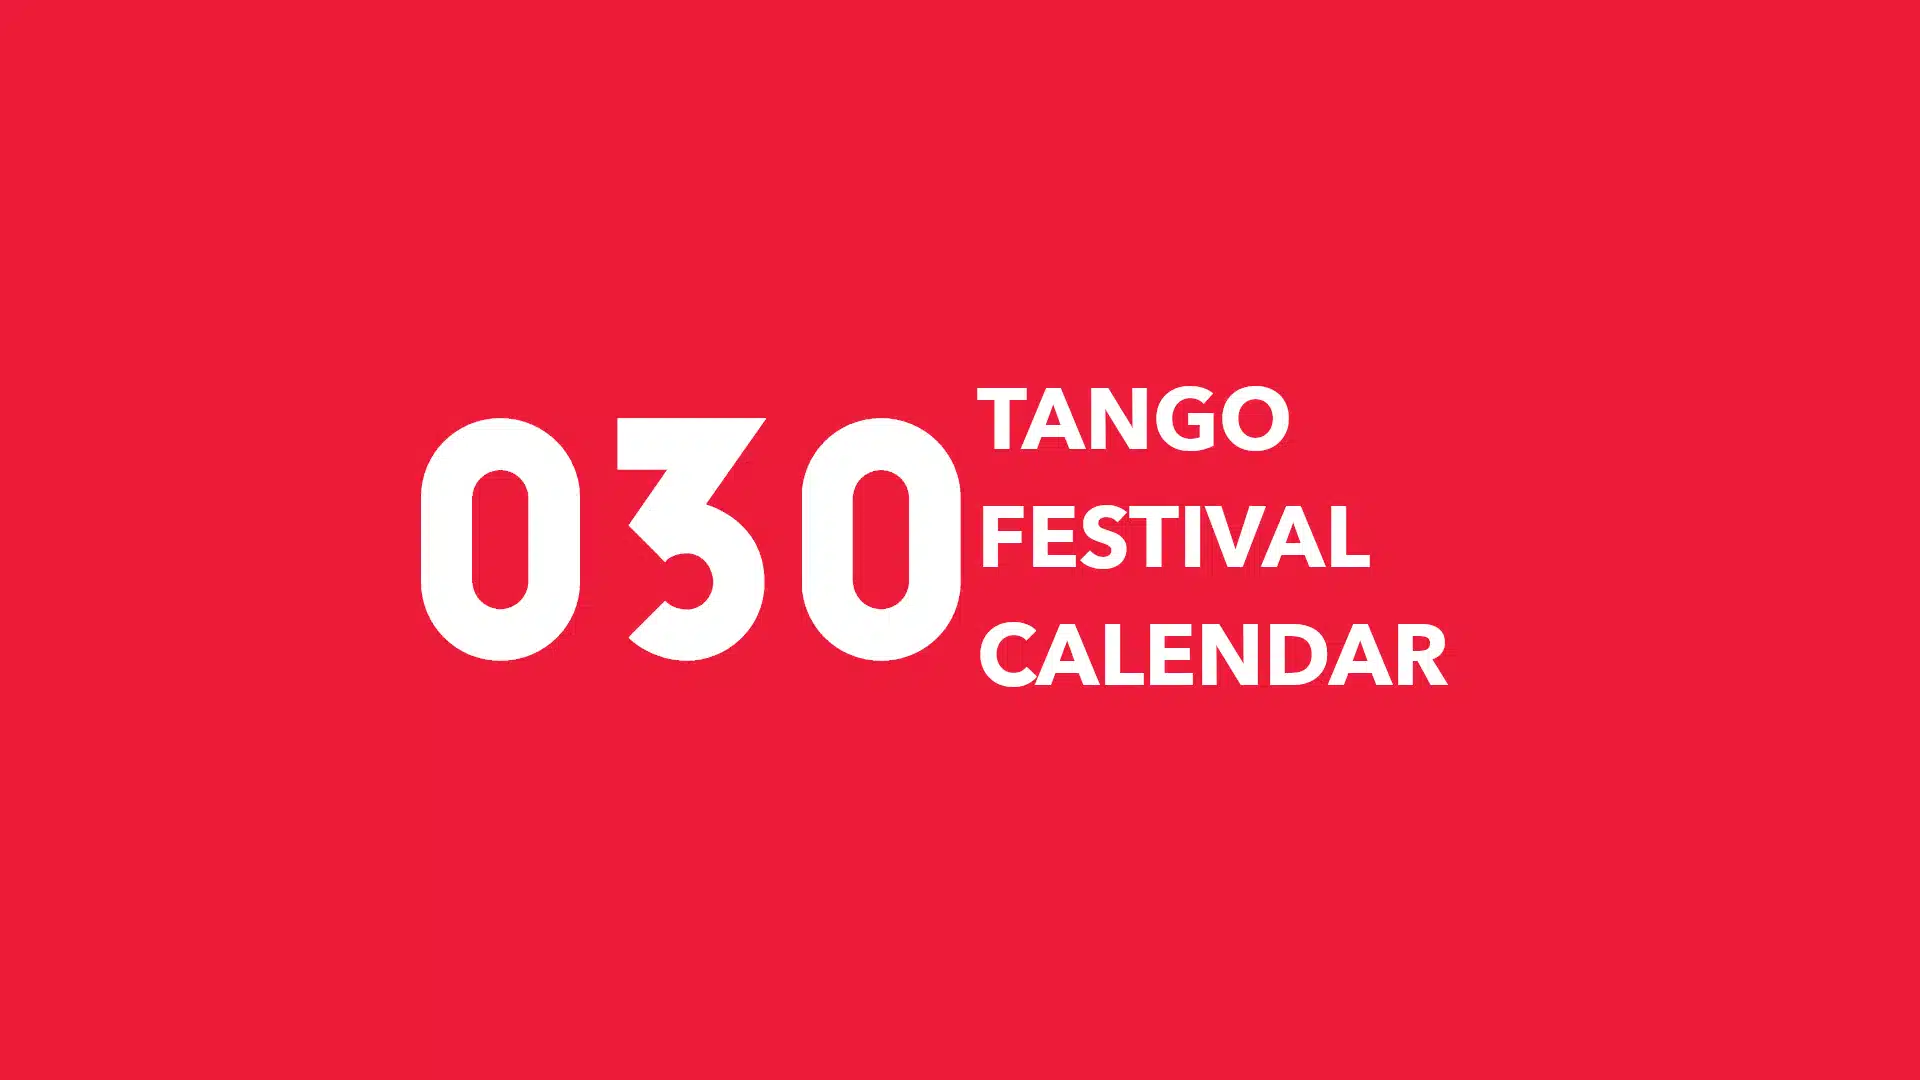 Argentine Tango Festival Calendar